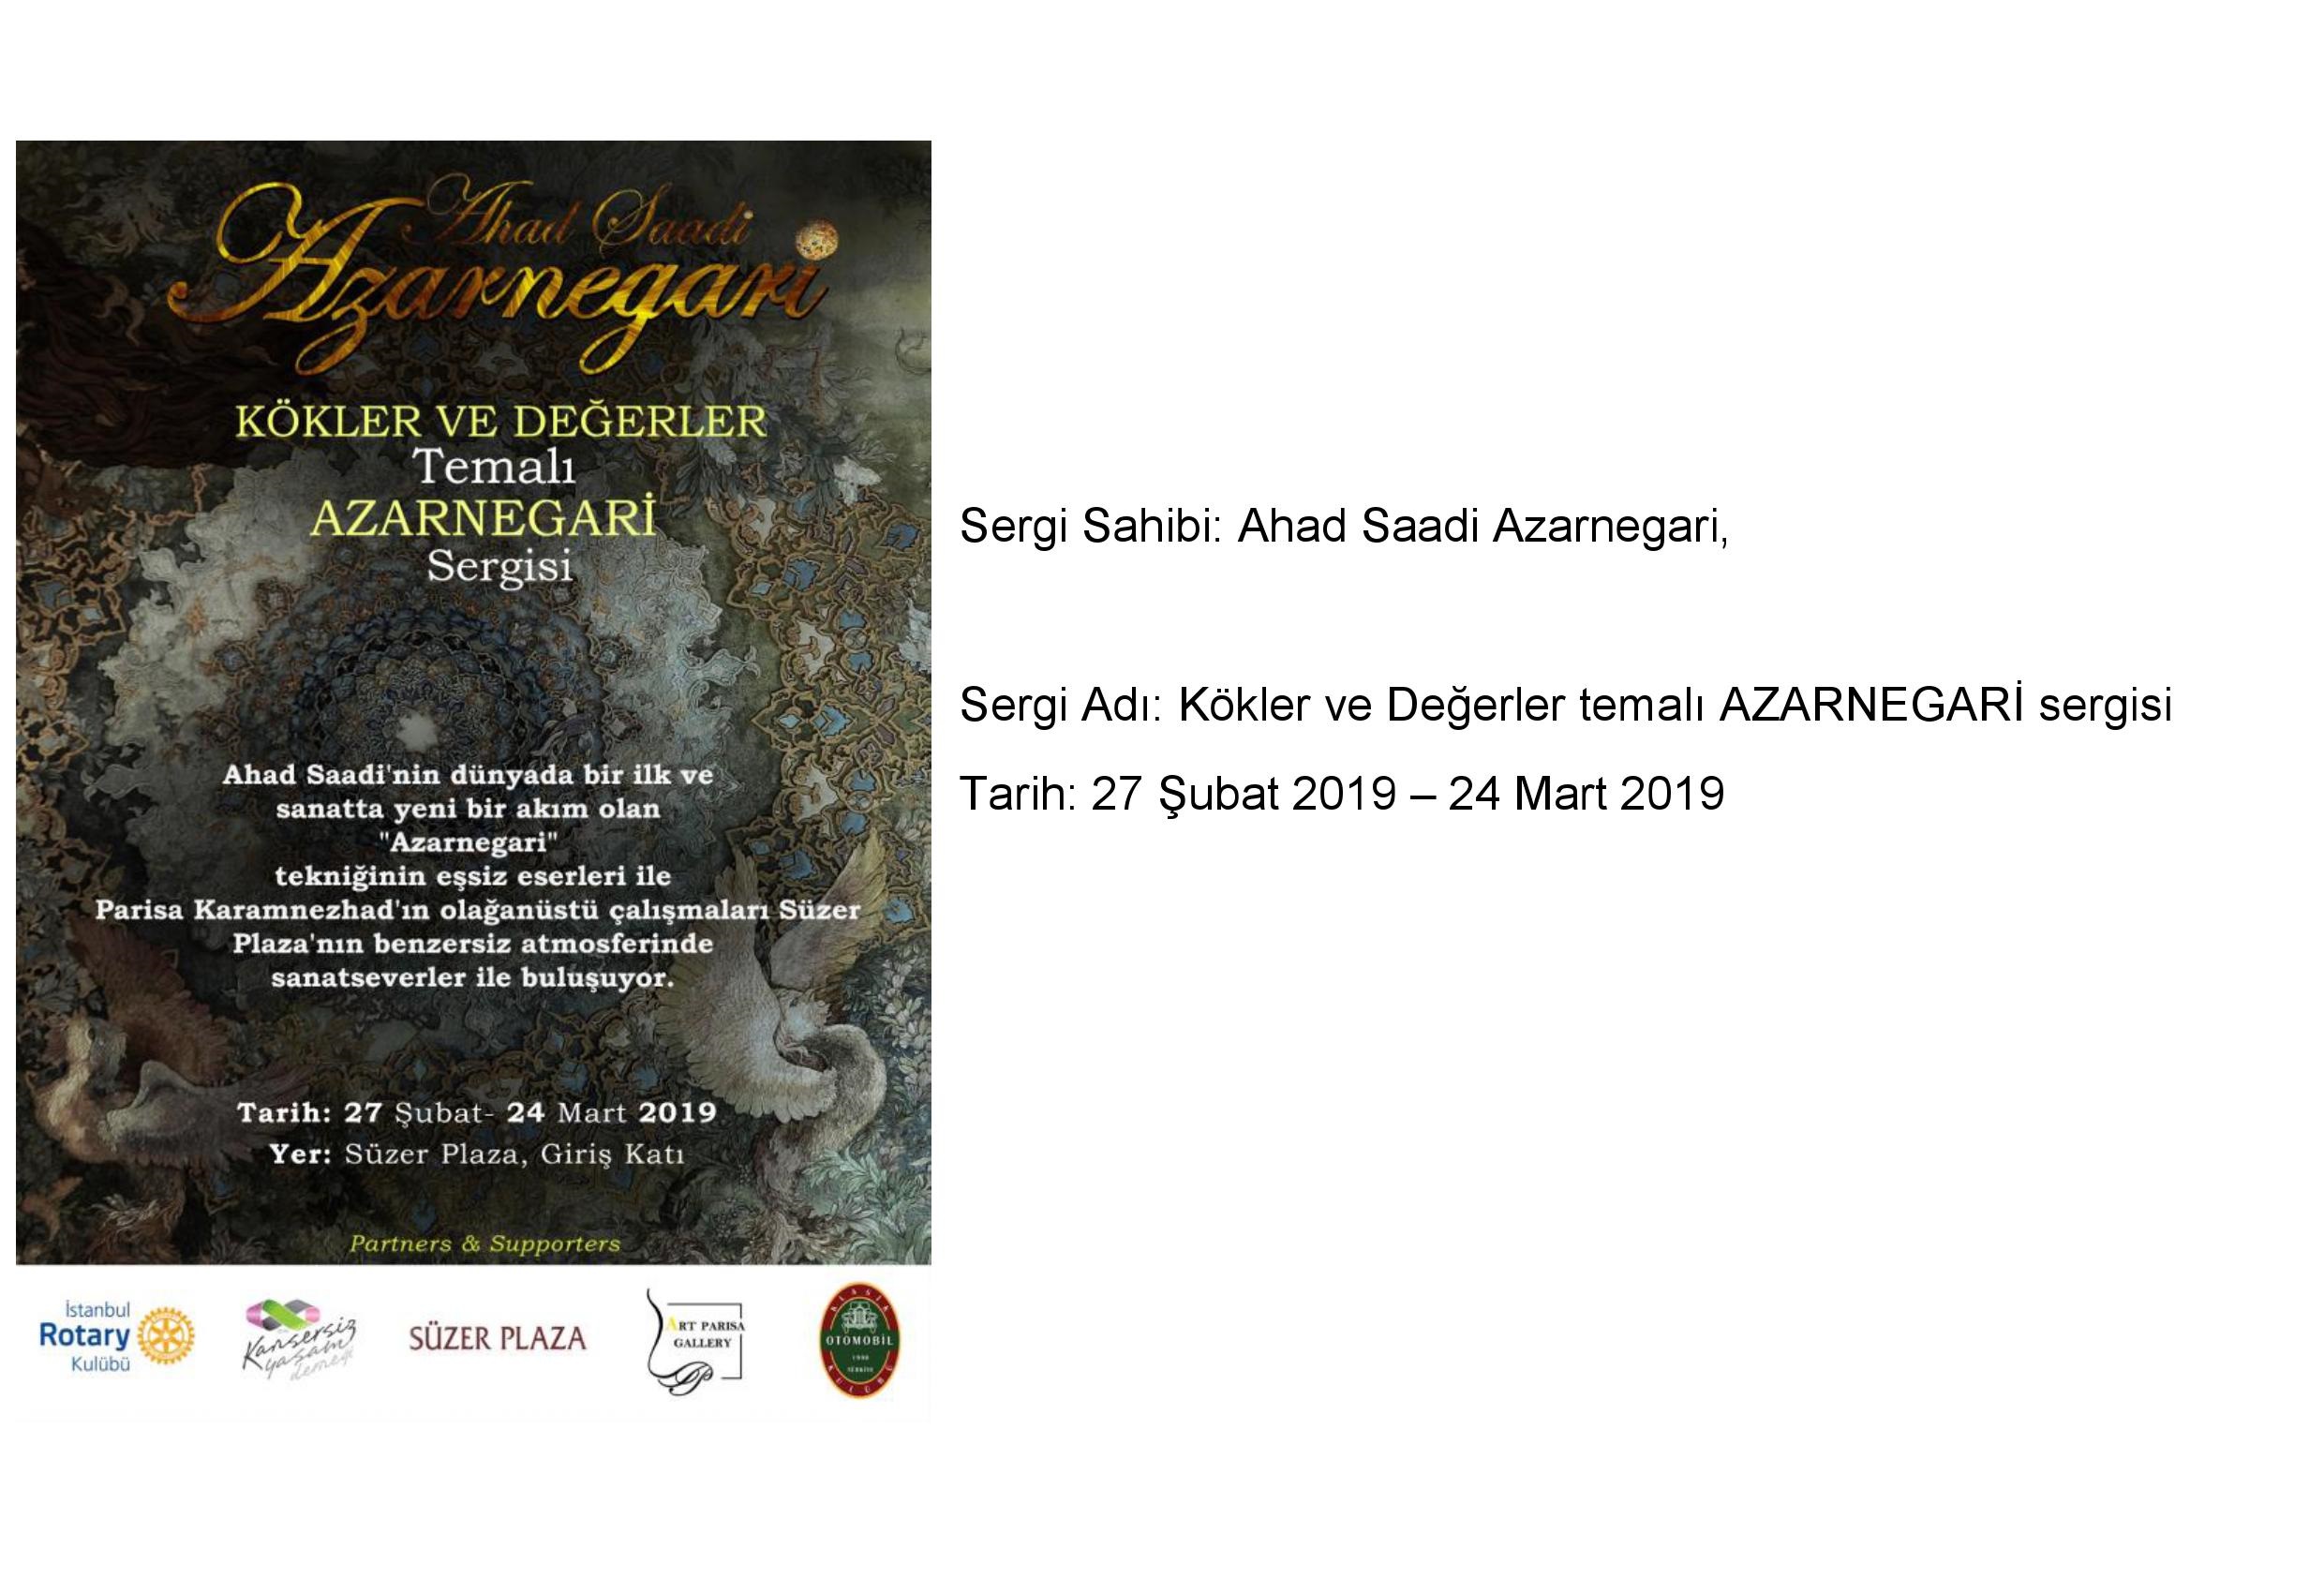 Azarnegari Exhibition